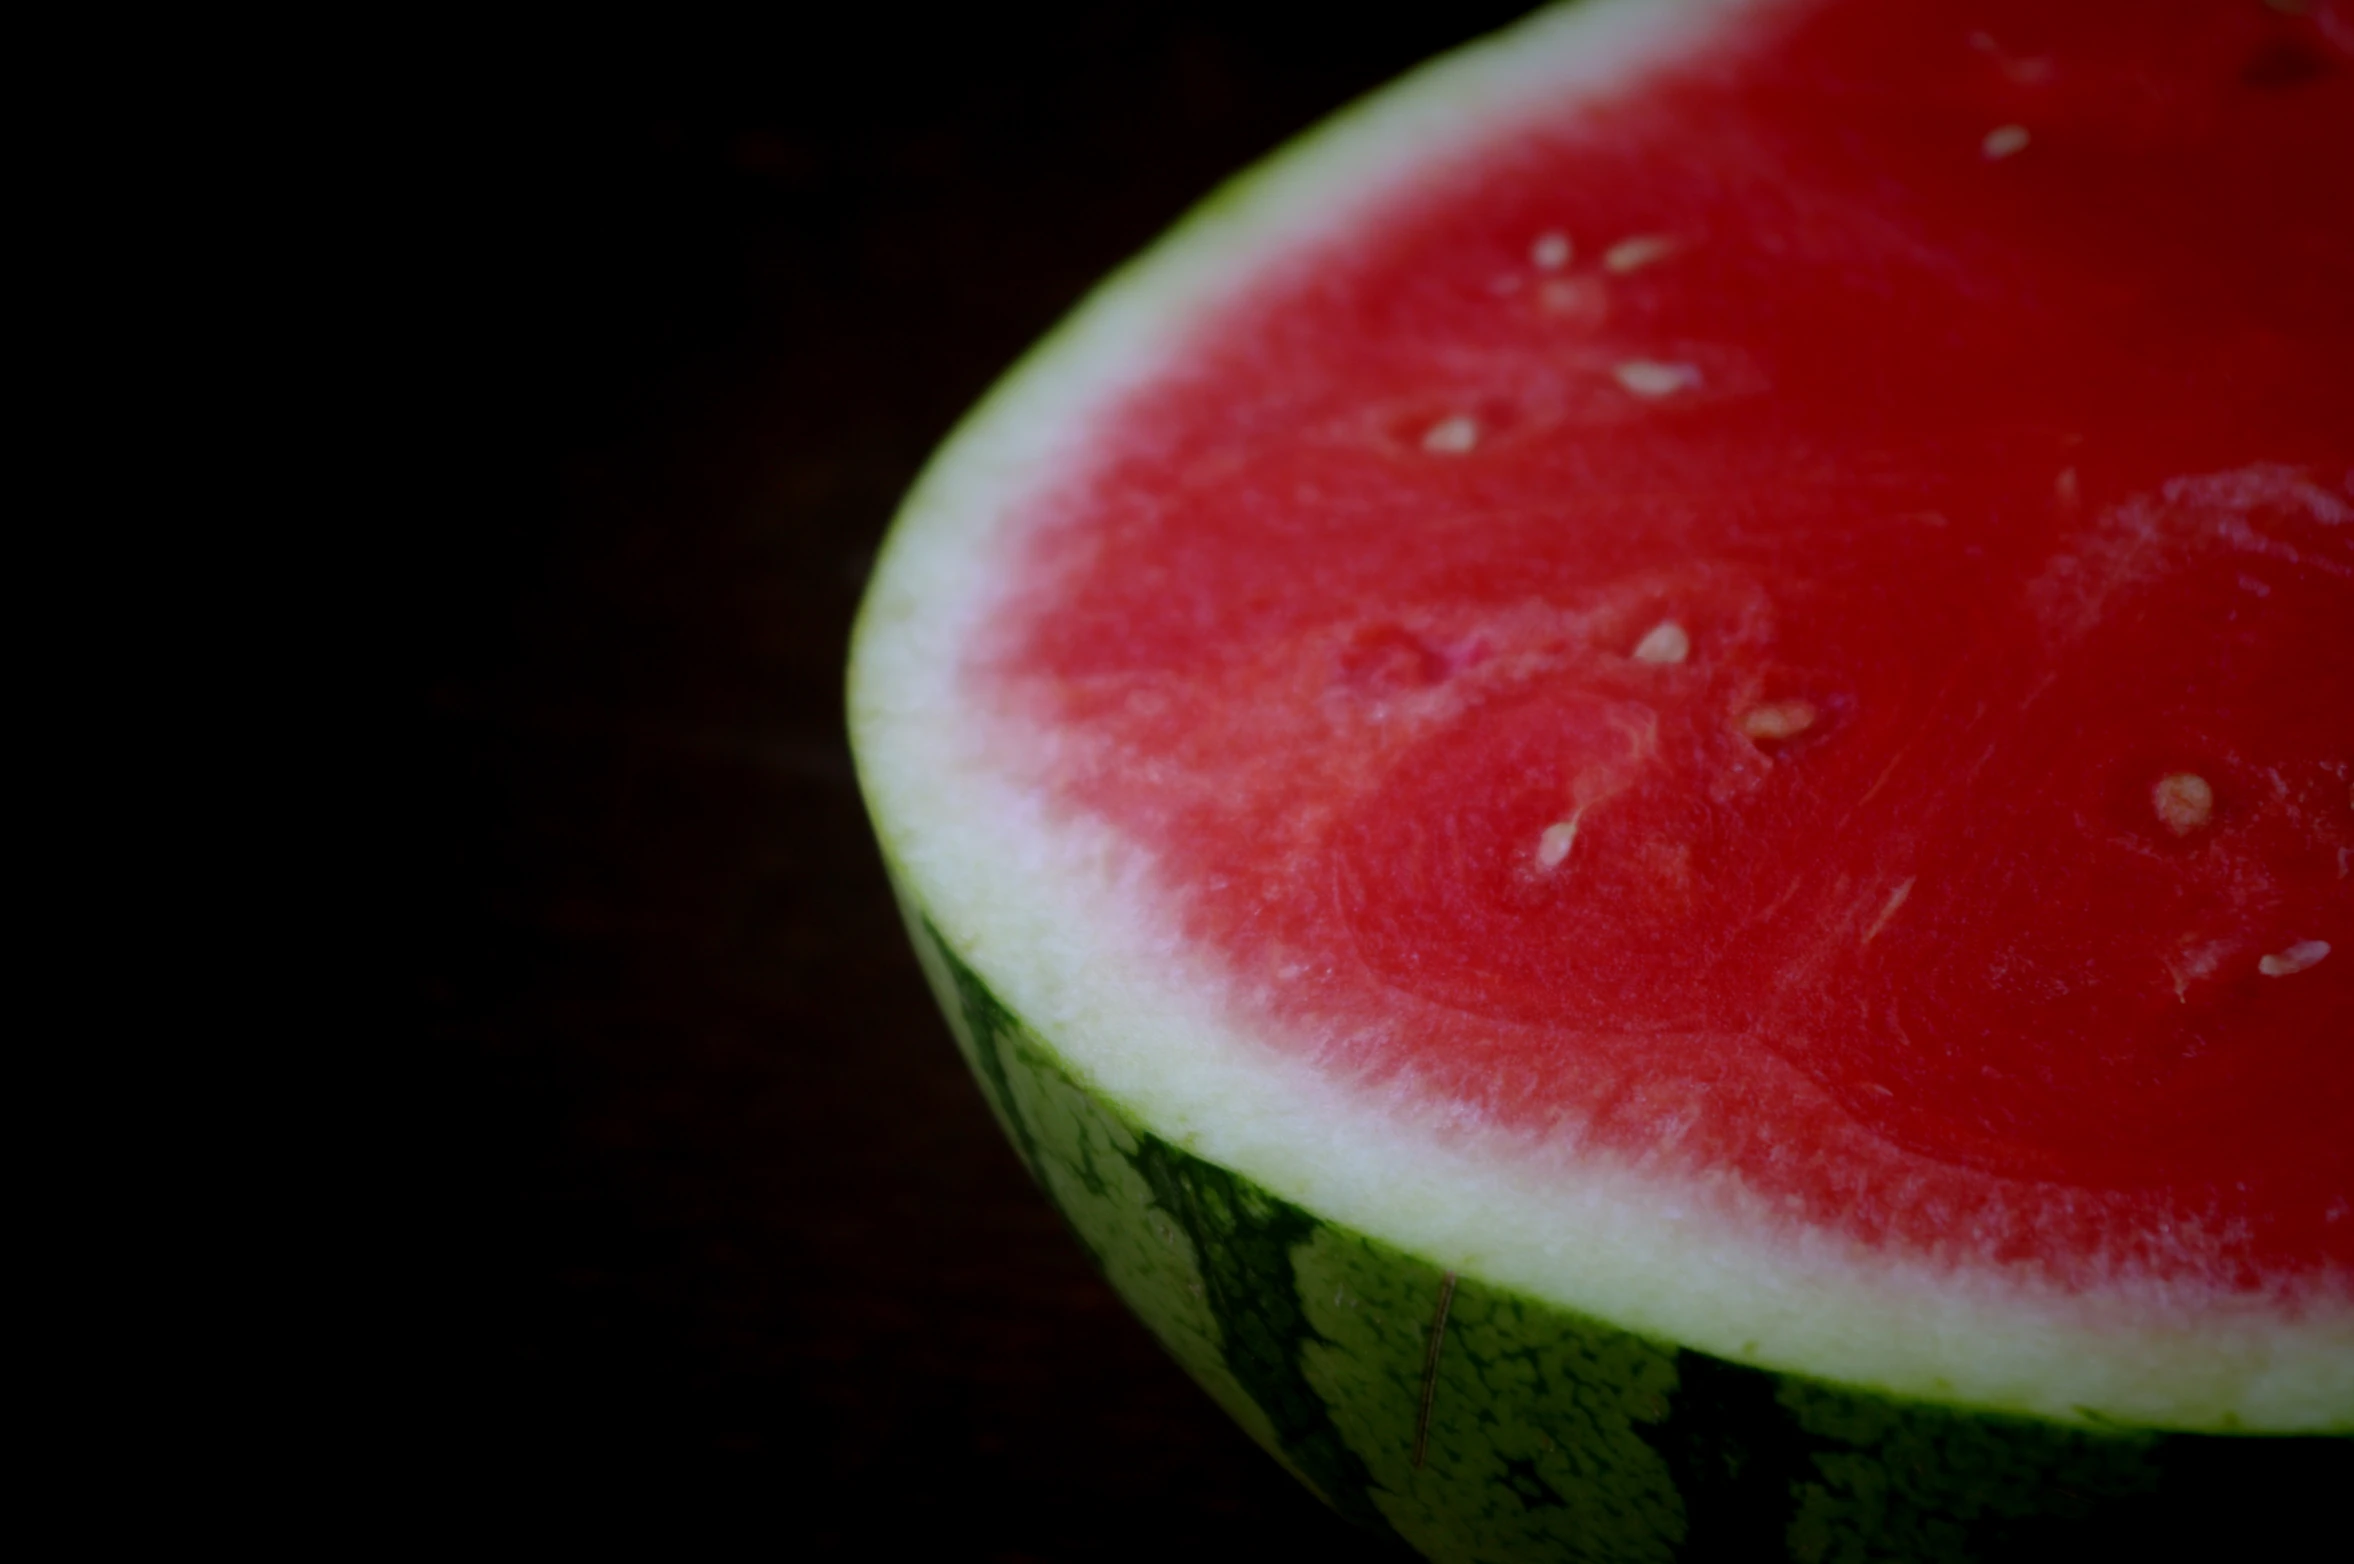 a big slice of watermelon on a dark background